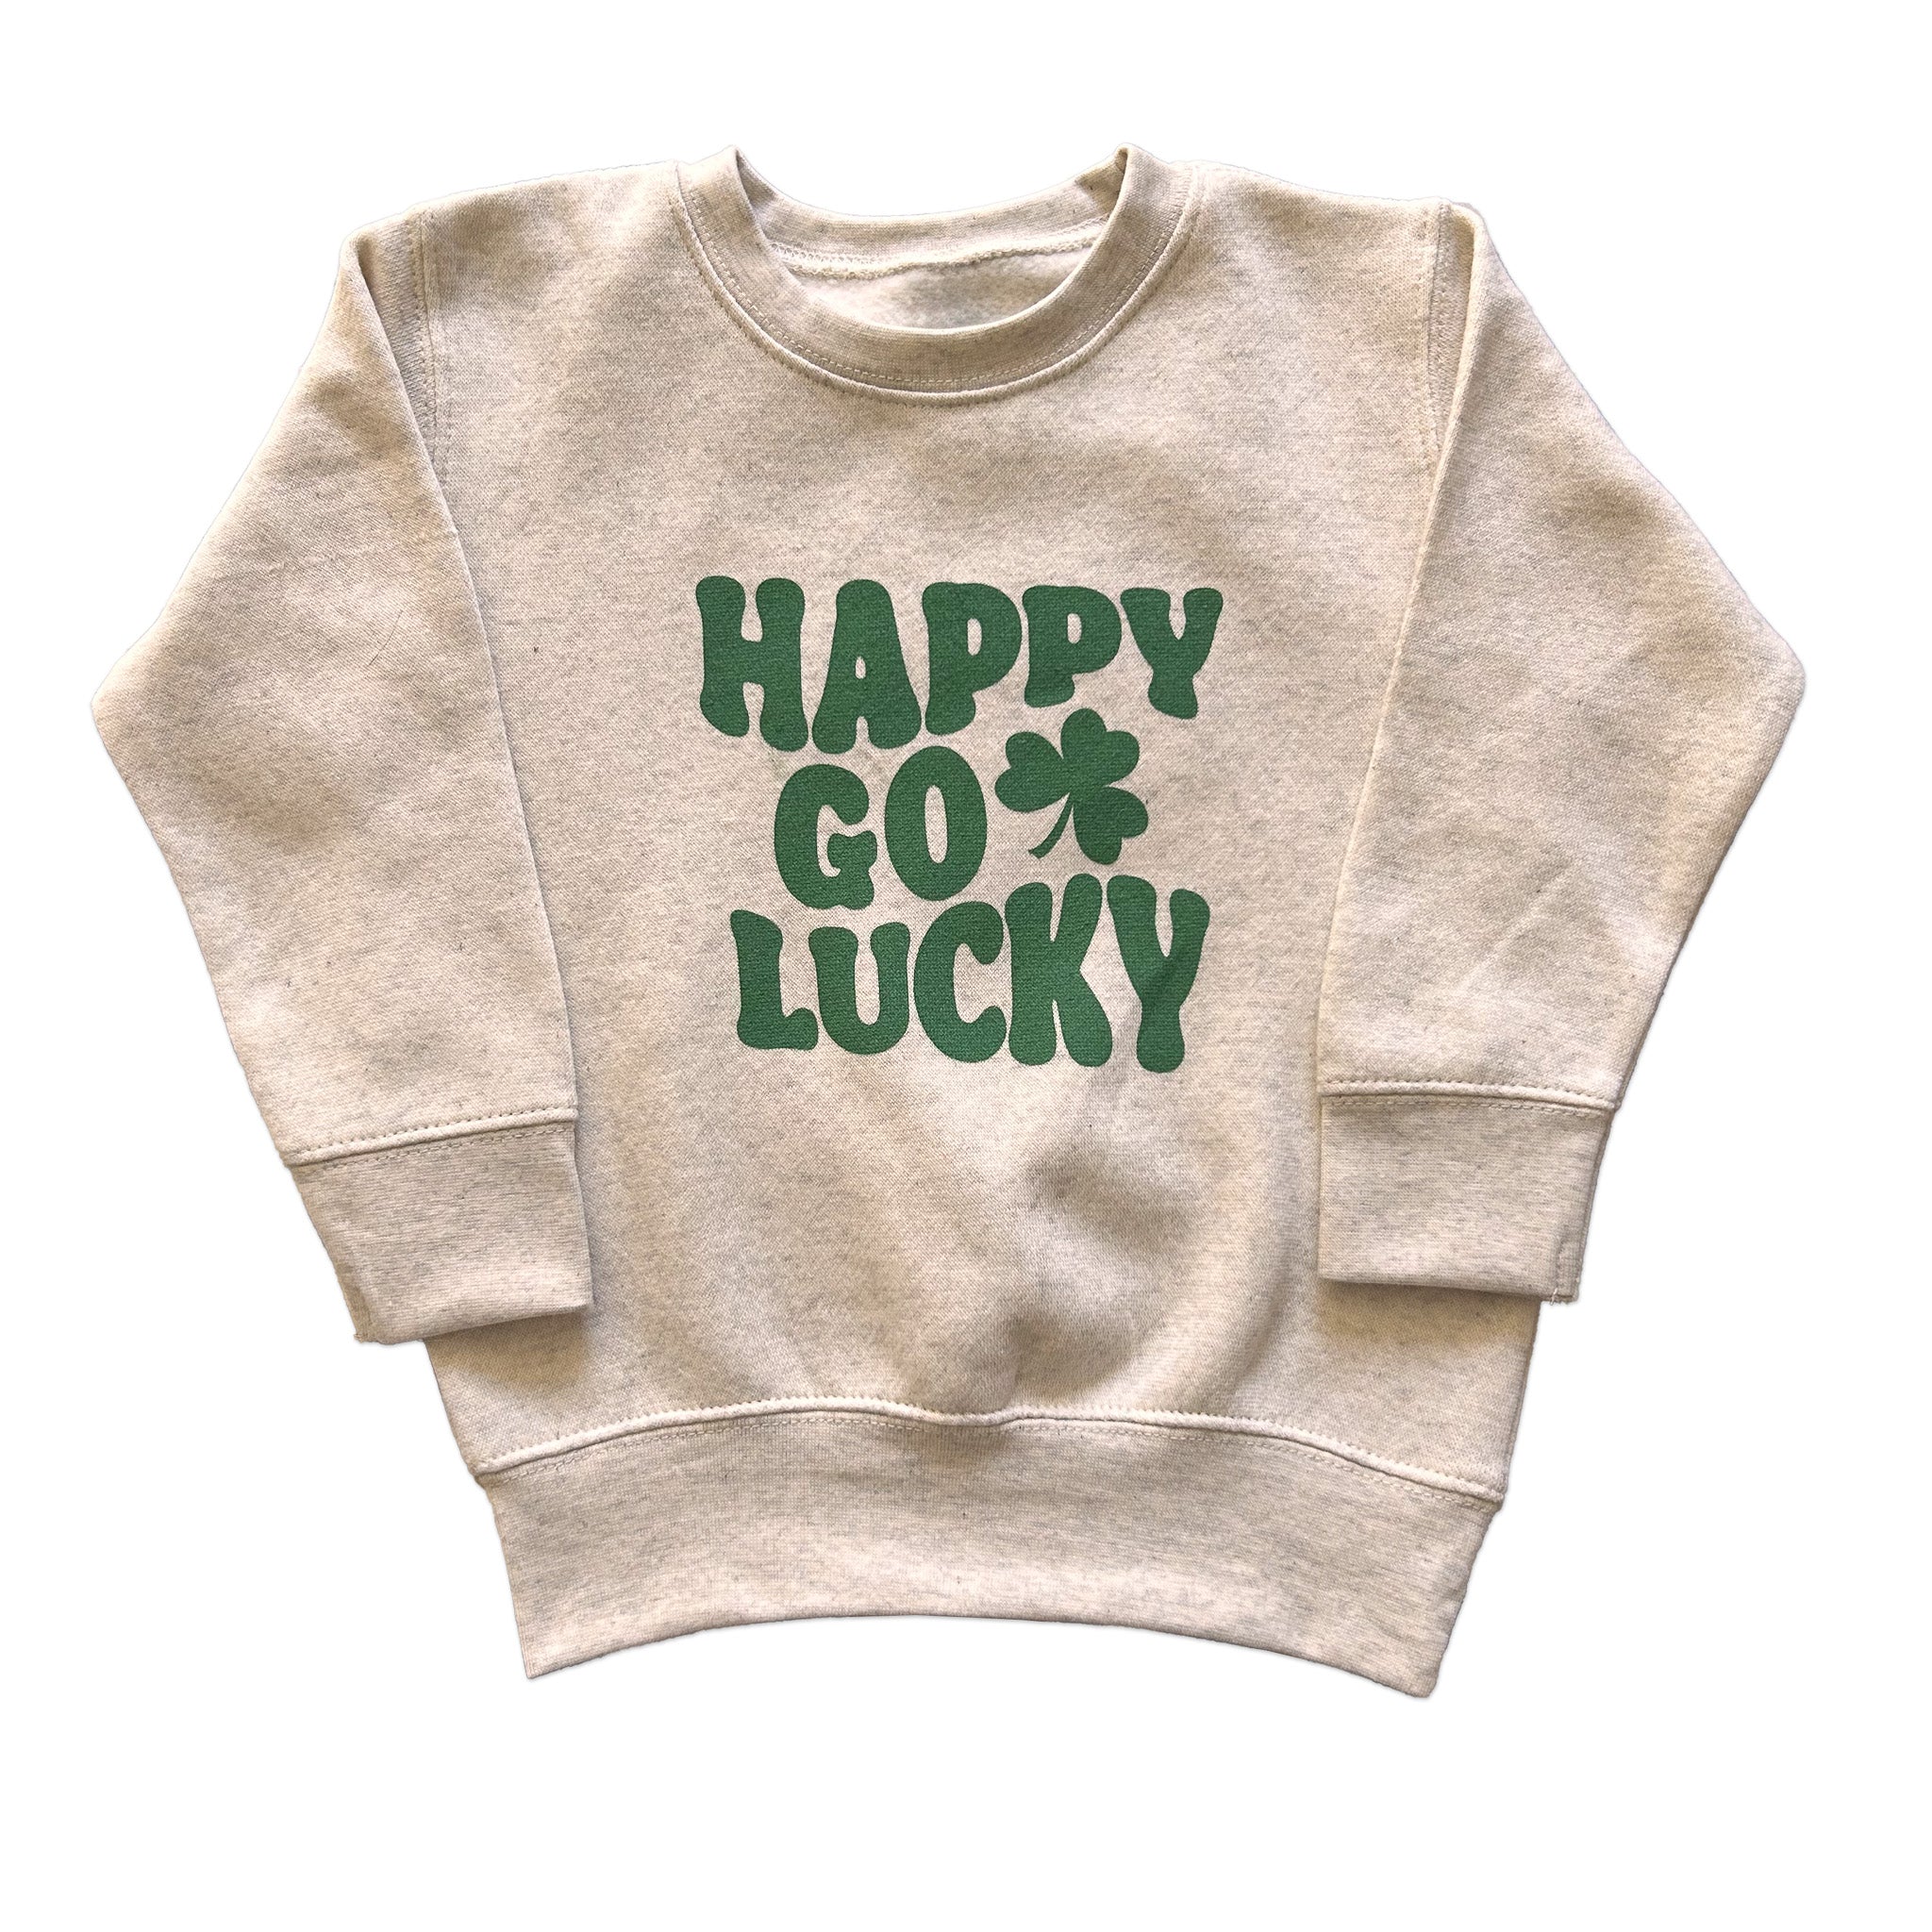 ON SALE - Happy Go Lucky toddler sweatshirt